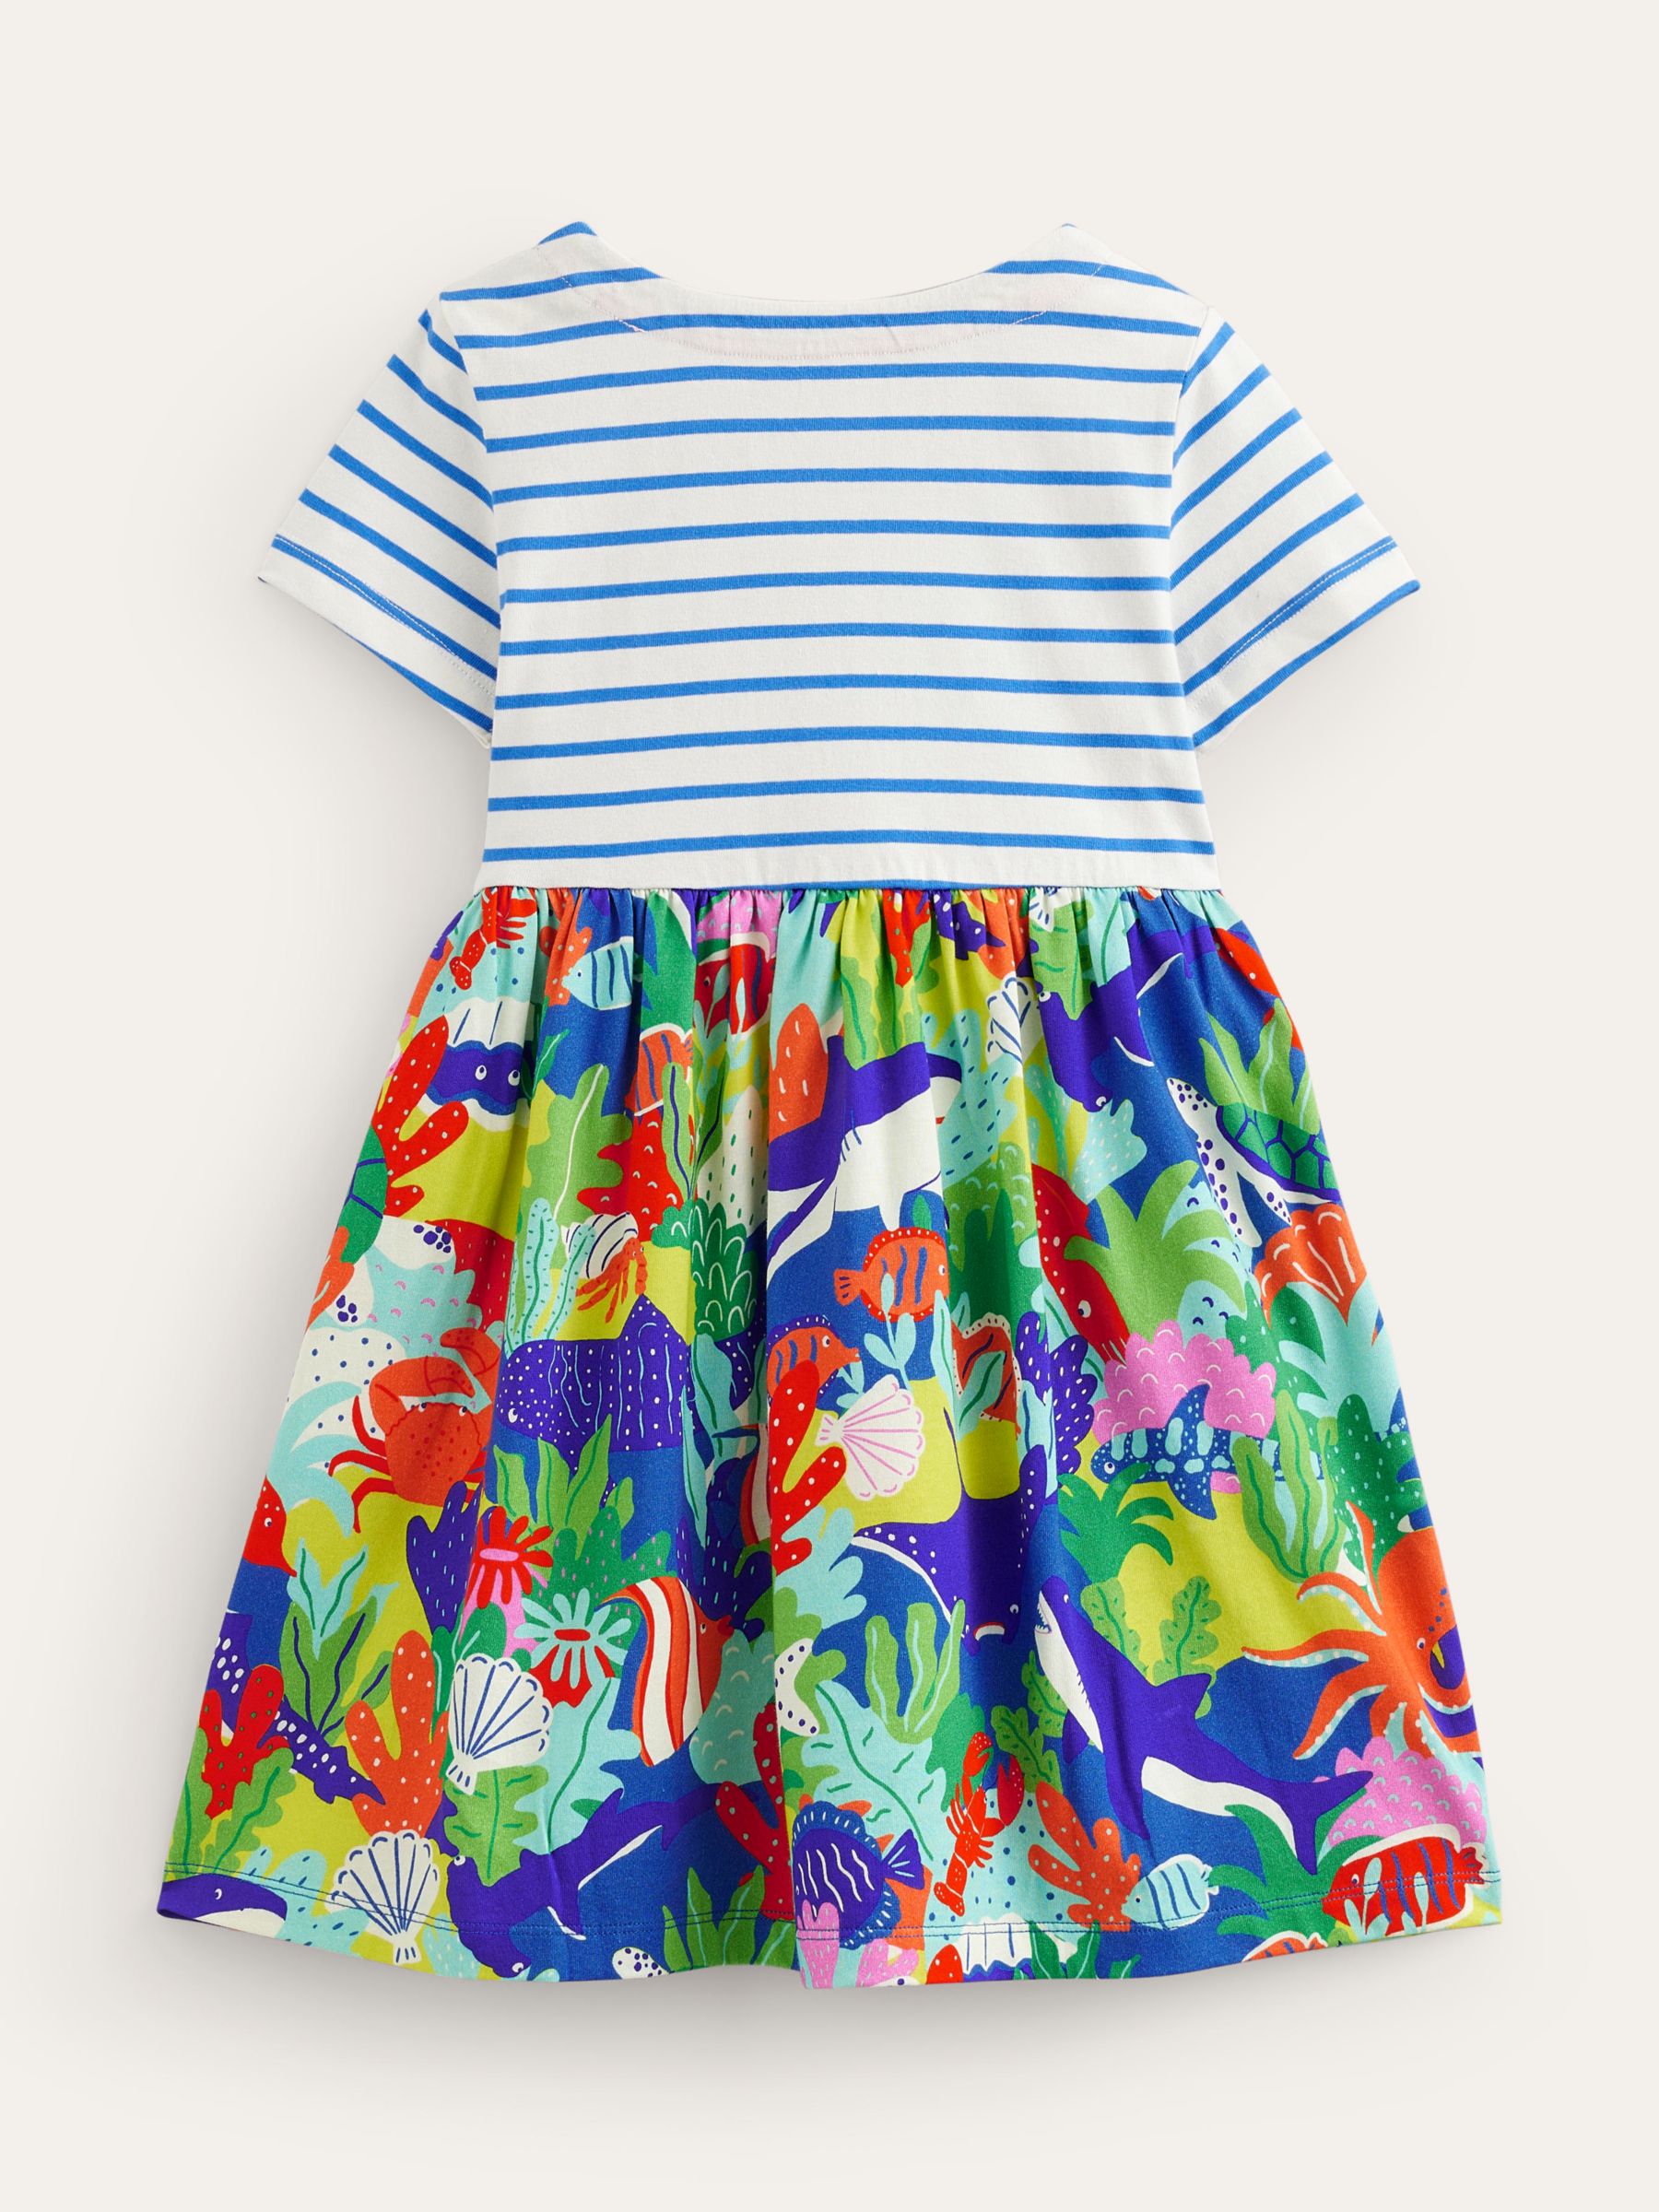 Mini Boden Kids' Hotchpotch Stripe/Sea Life Print Jersey Dress, Sapphire Blue, 12-18 months